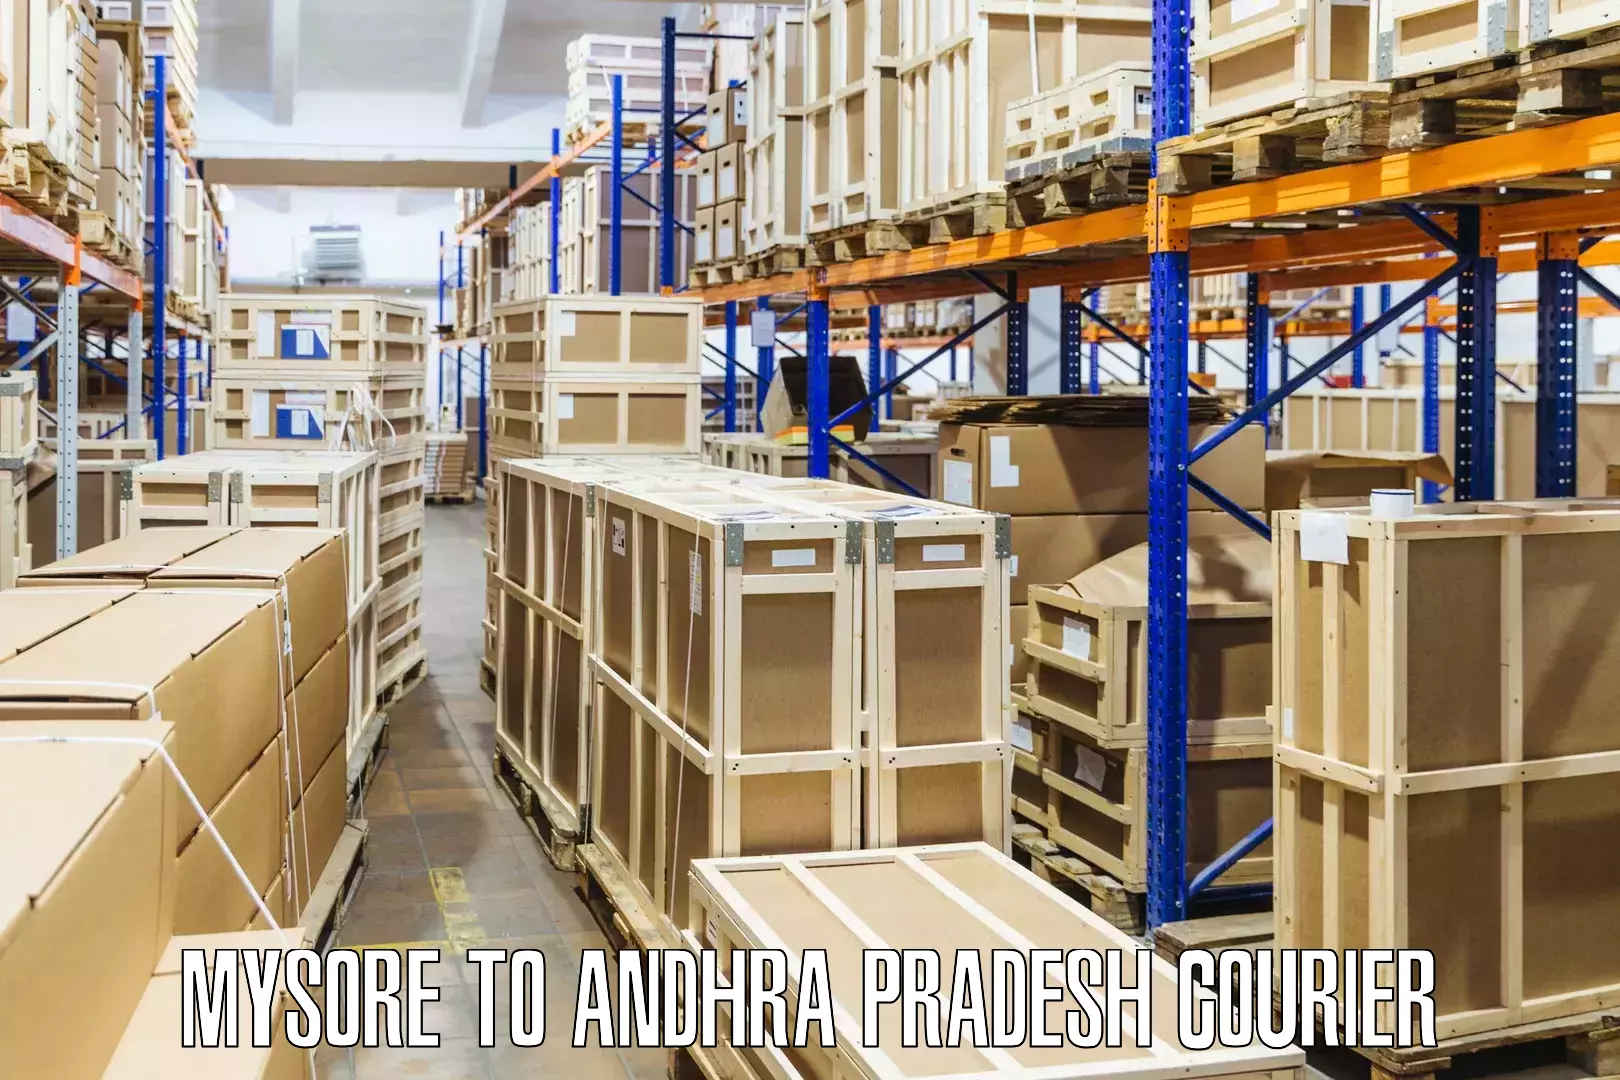 Courier service comparison Mysore to Andhra Pradesh